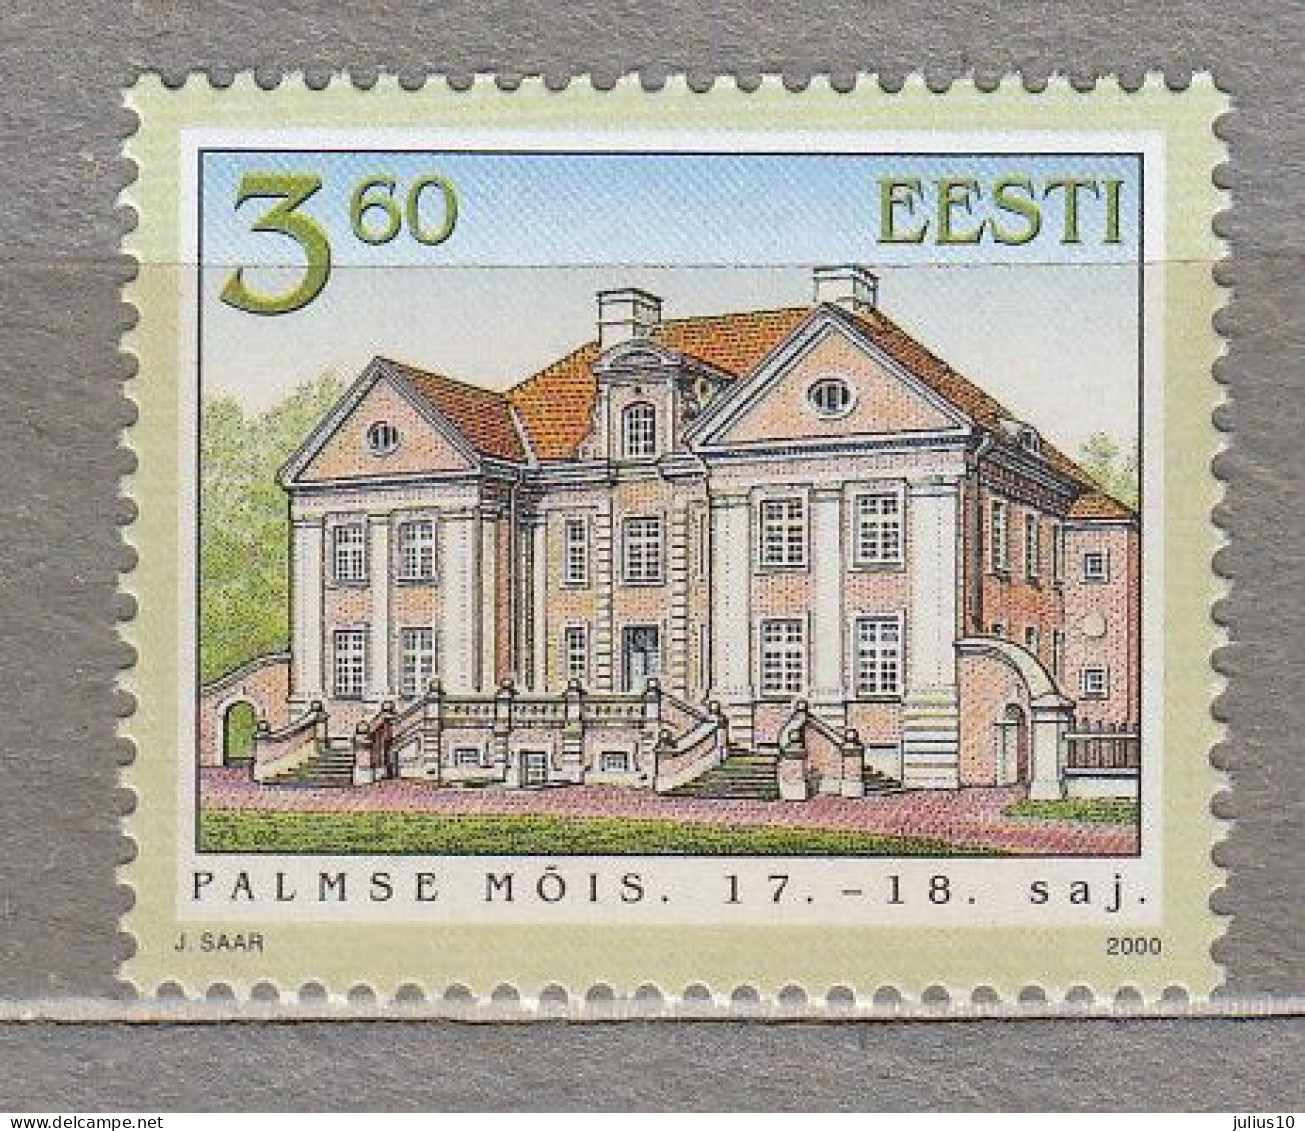 ESTONIA 2000 Architecture MNH(**) Mi 372 # Est358 - Estland